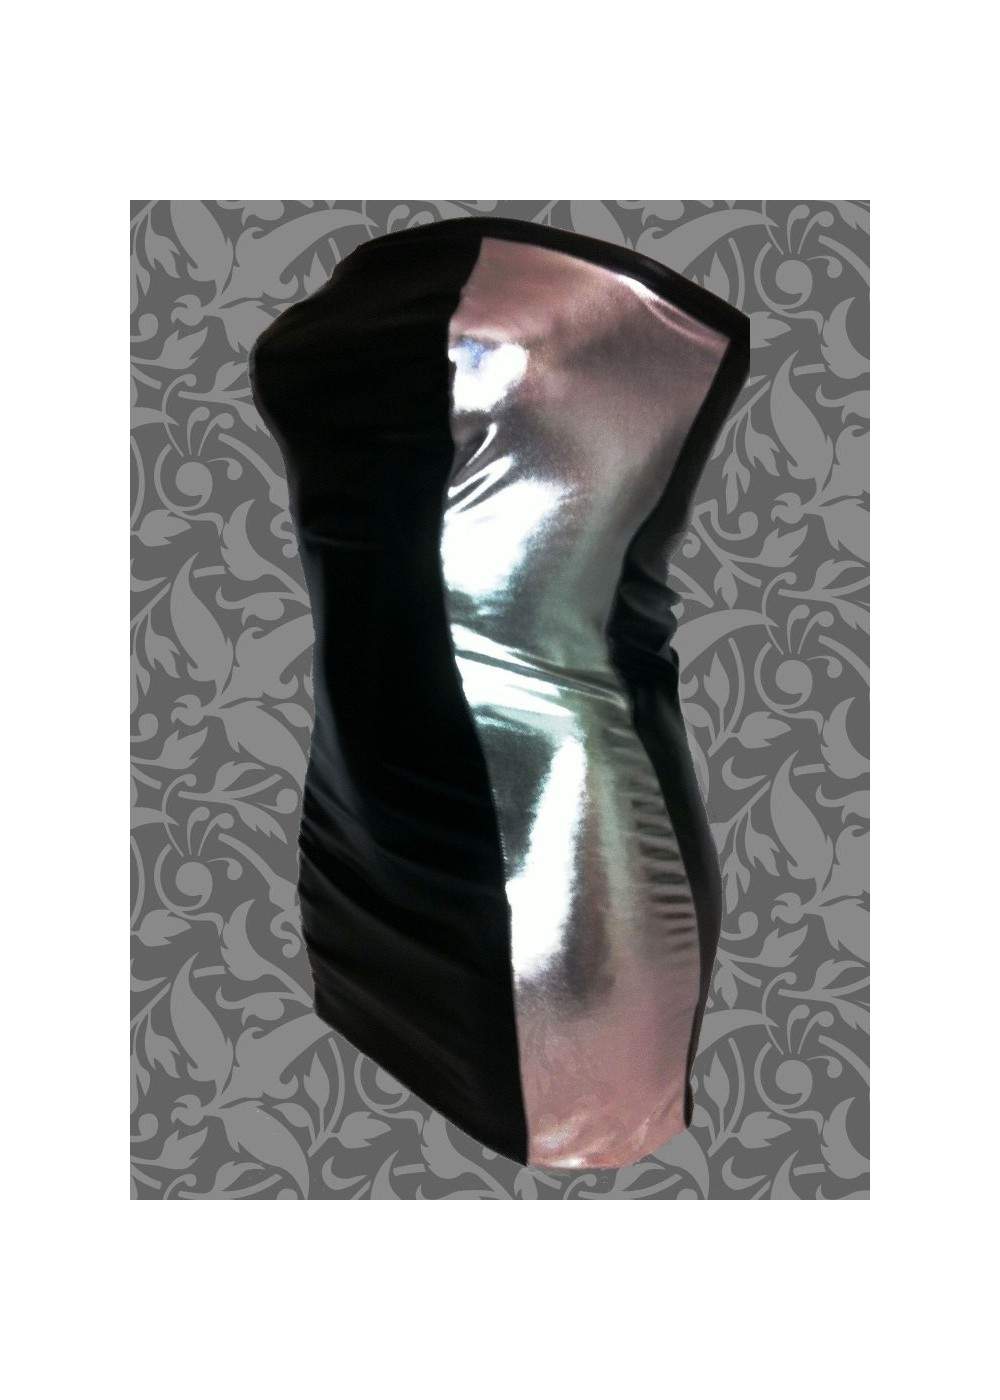 FGirth Leder-Optik Große Größen BANDEAU-Kleid schwarz silber - 